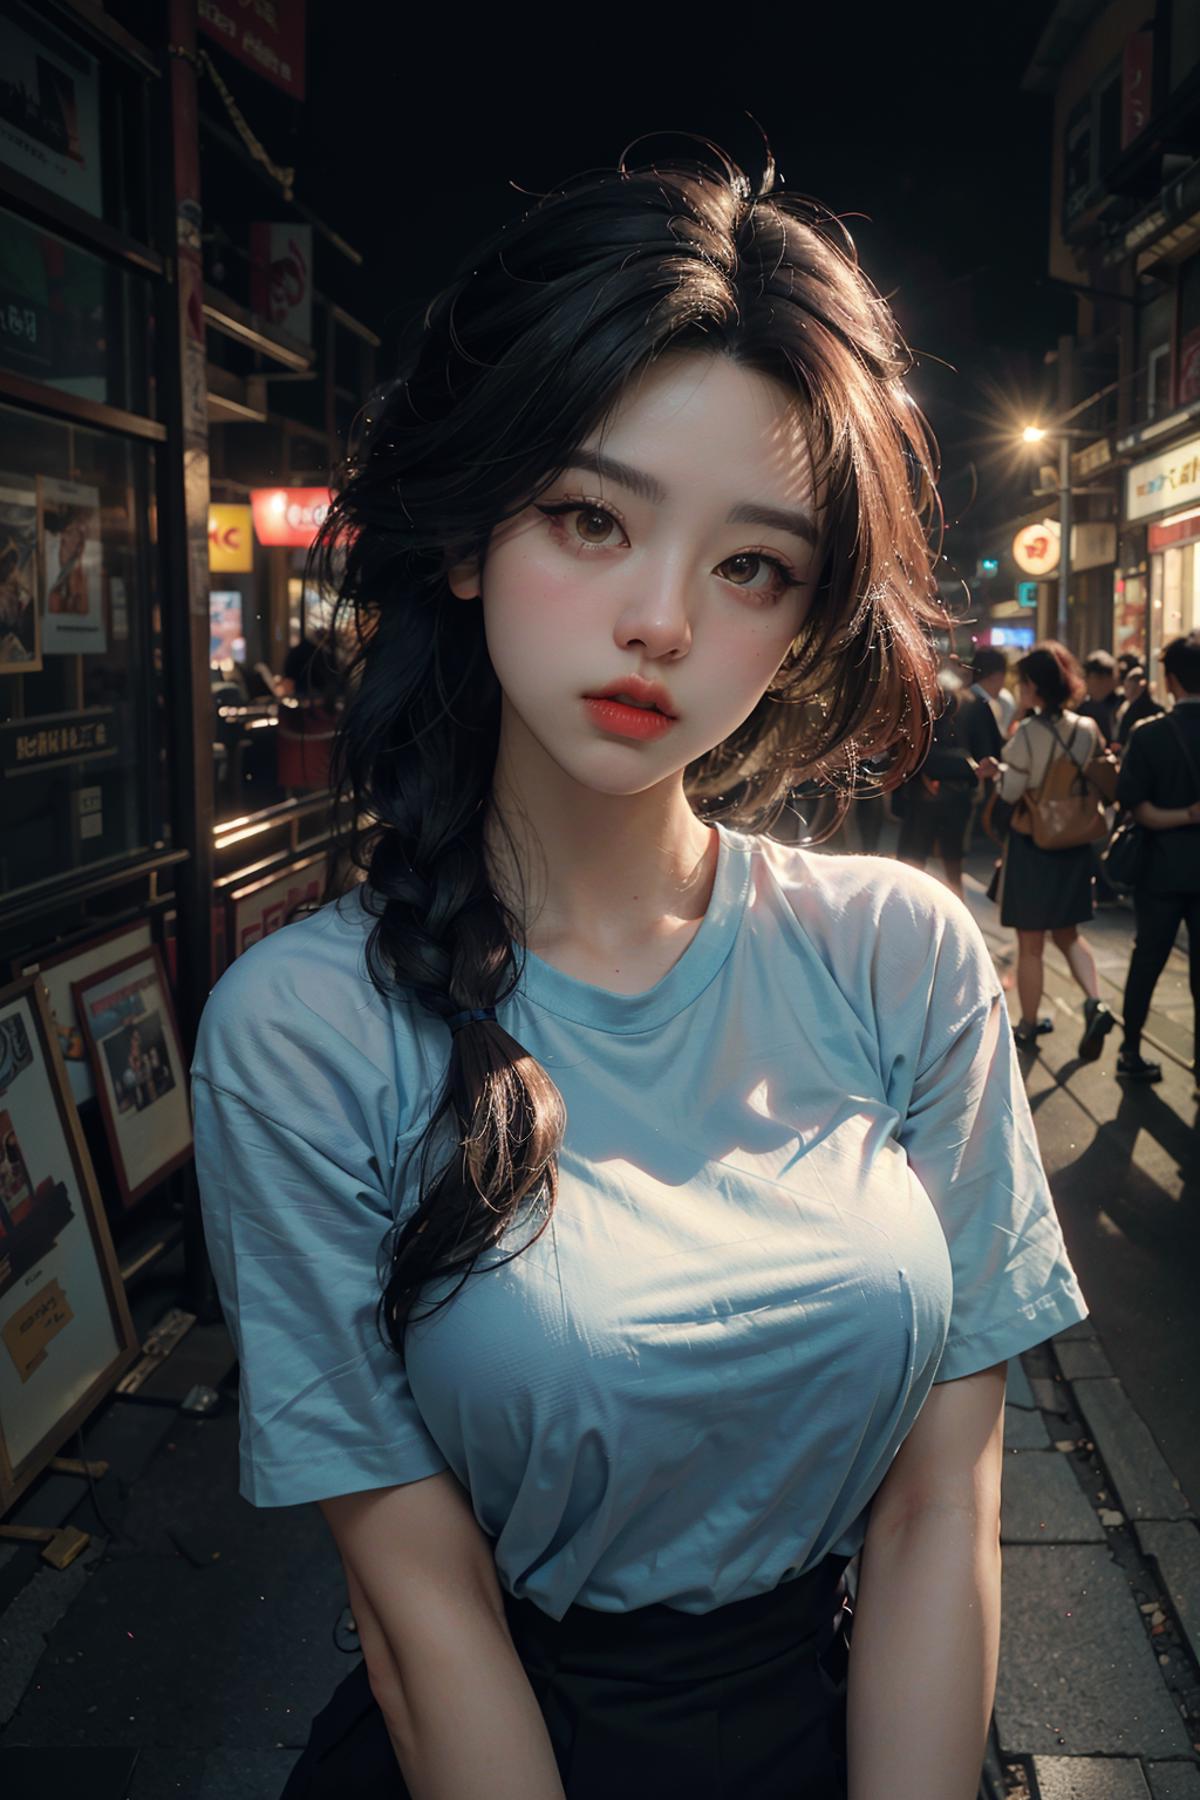 Han Hang - Instagram Model (han.hang) image by infolk